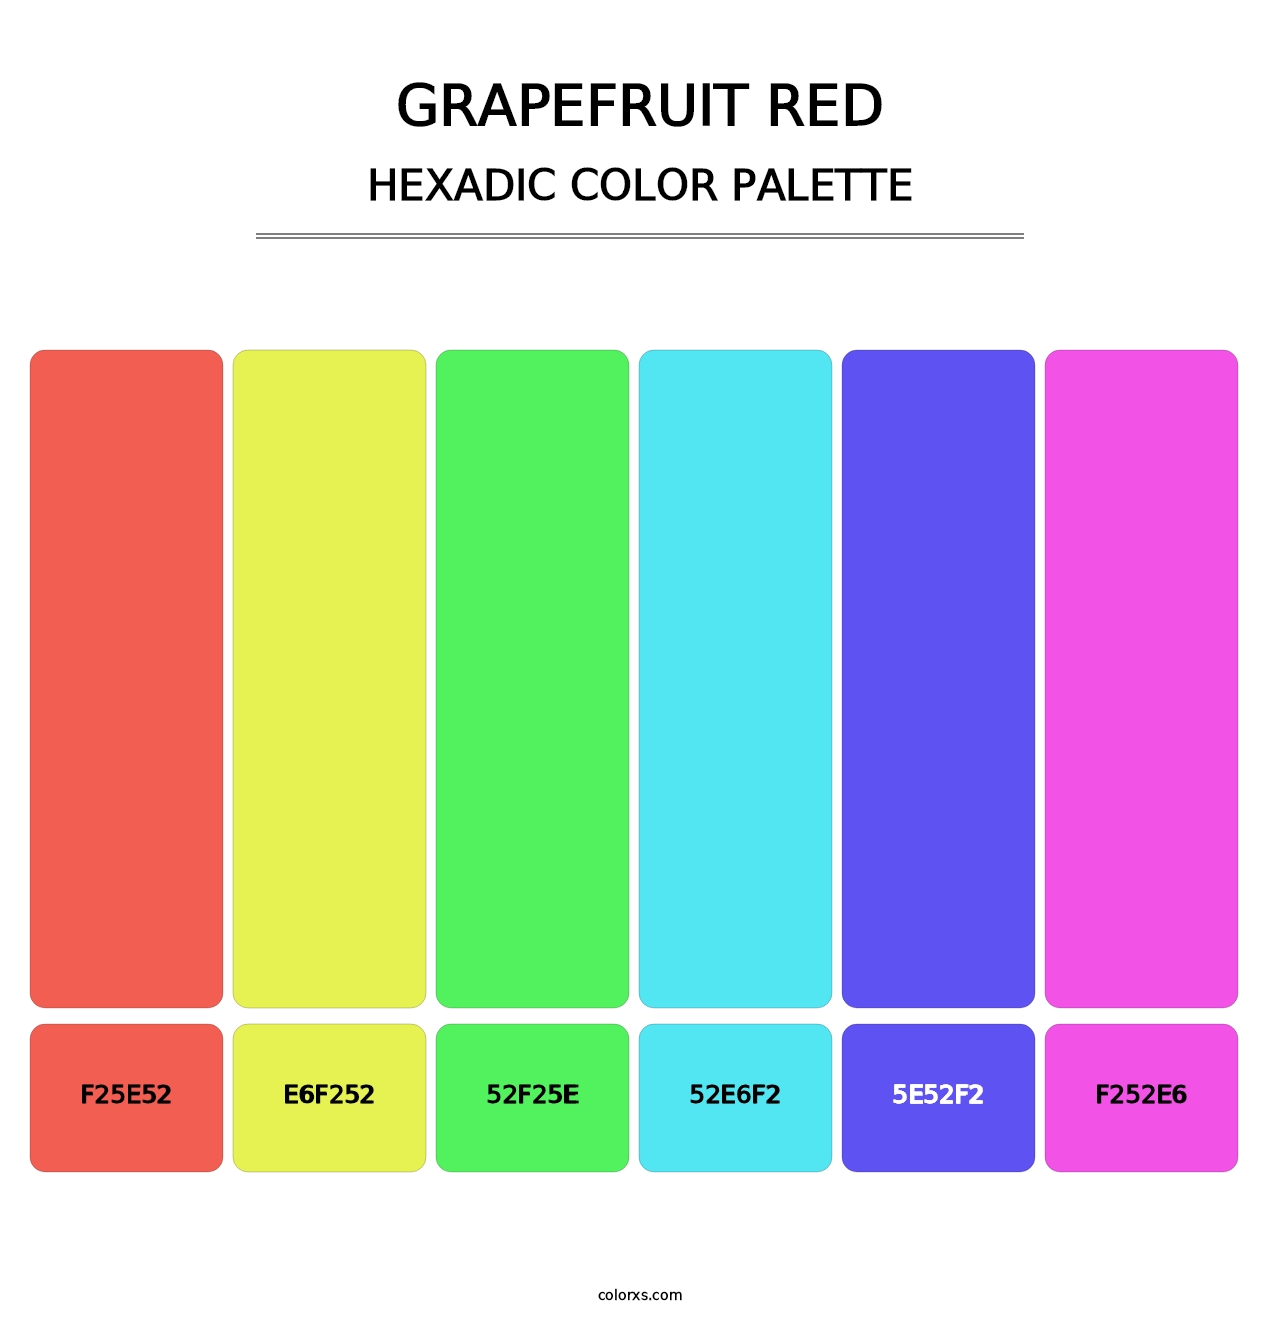 Grapefruit Red - Hexadic Color Palette